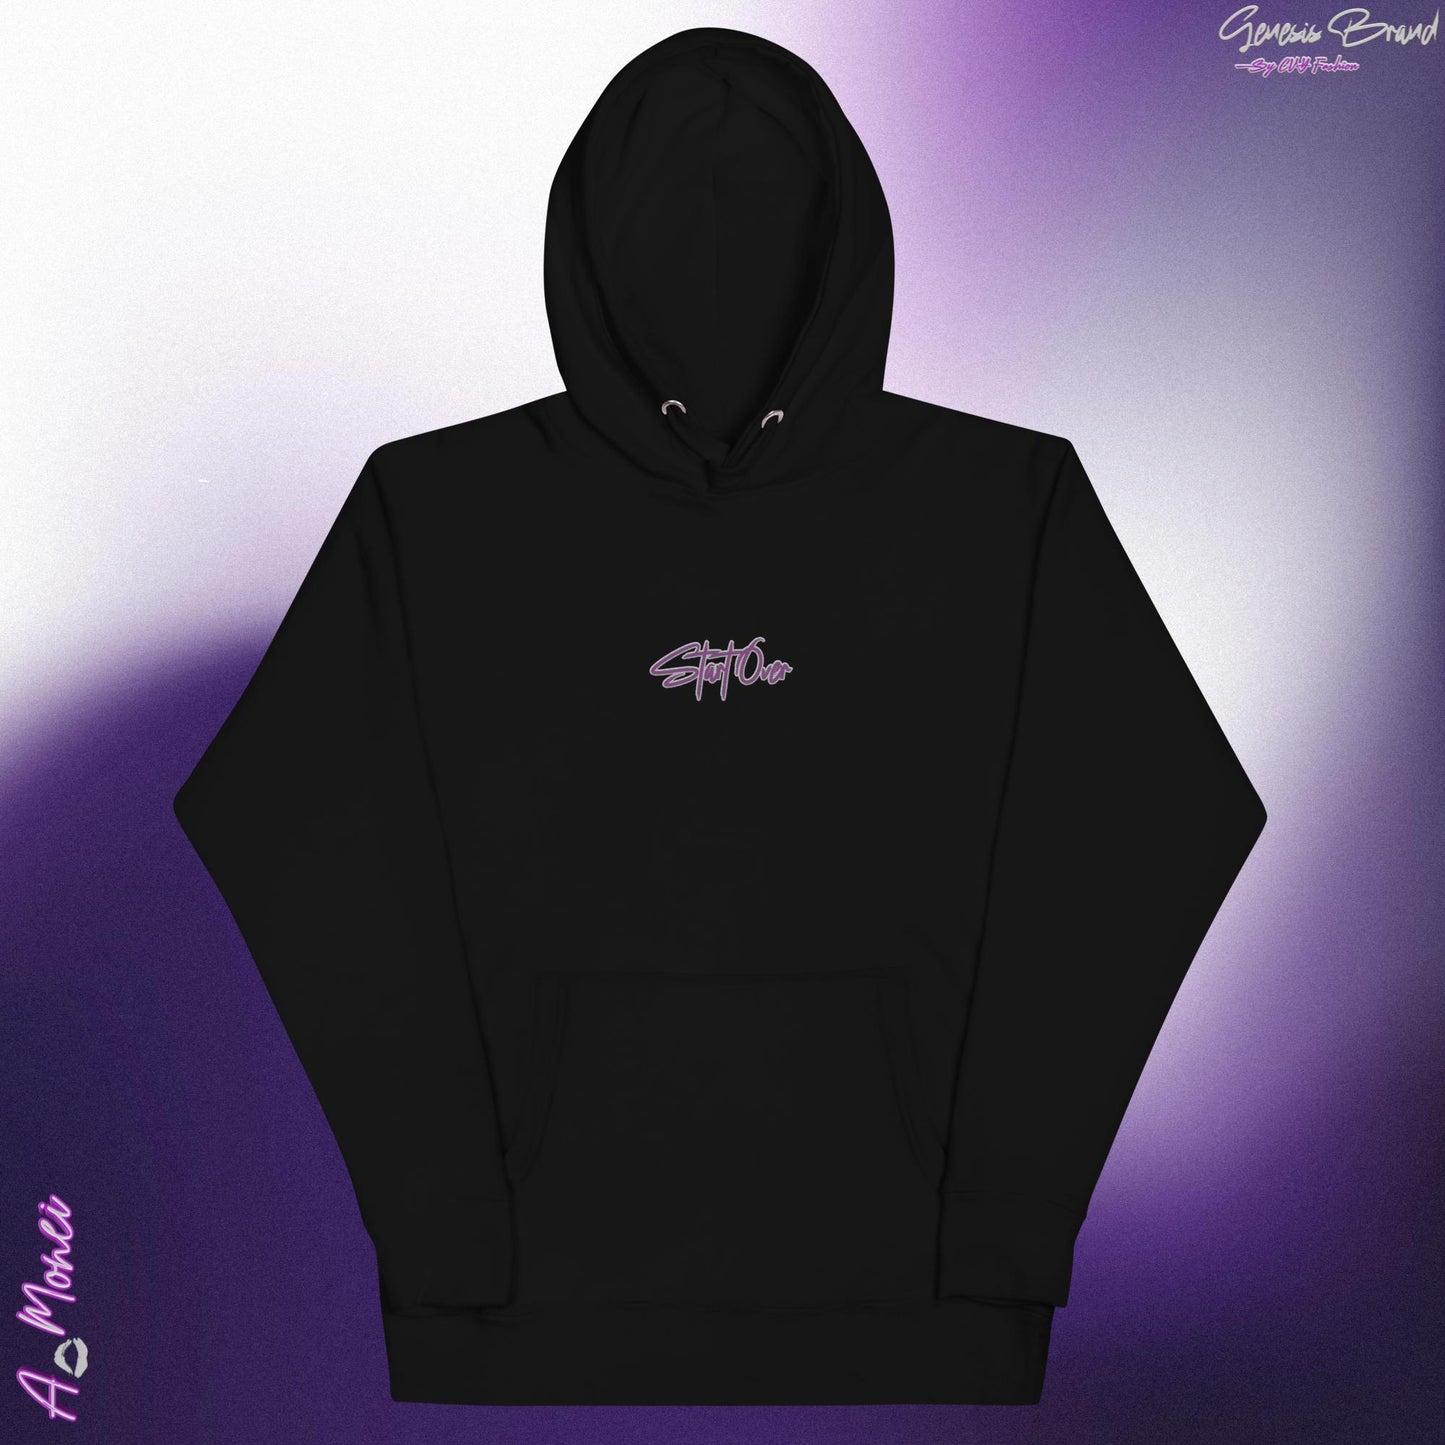 GAM S/O Black/Purple Unisex Hoodie